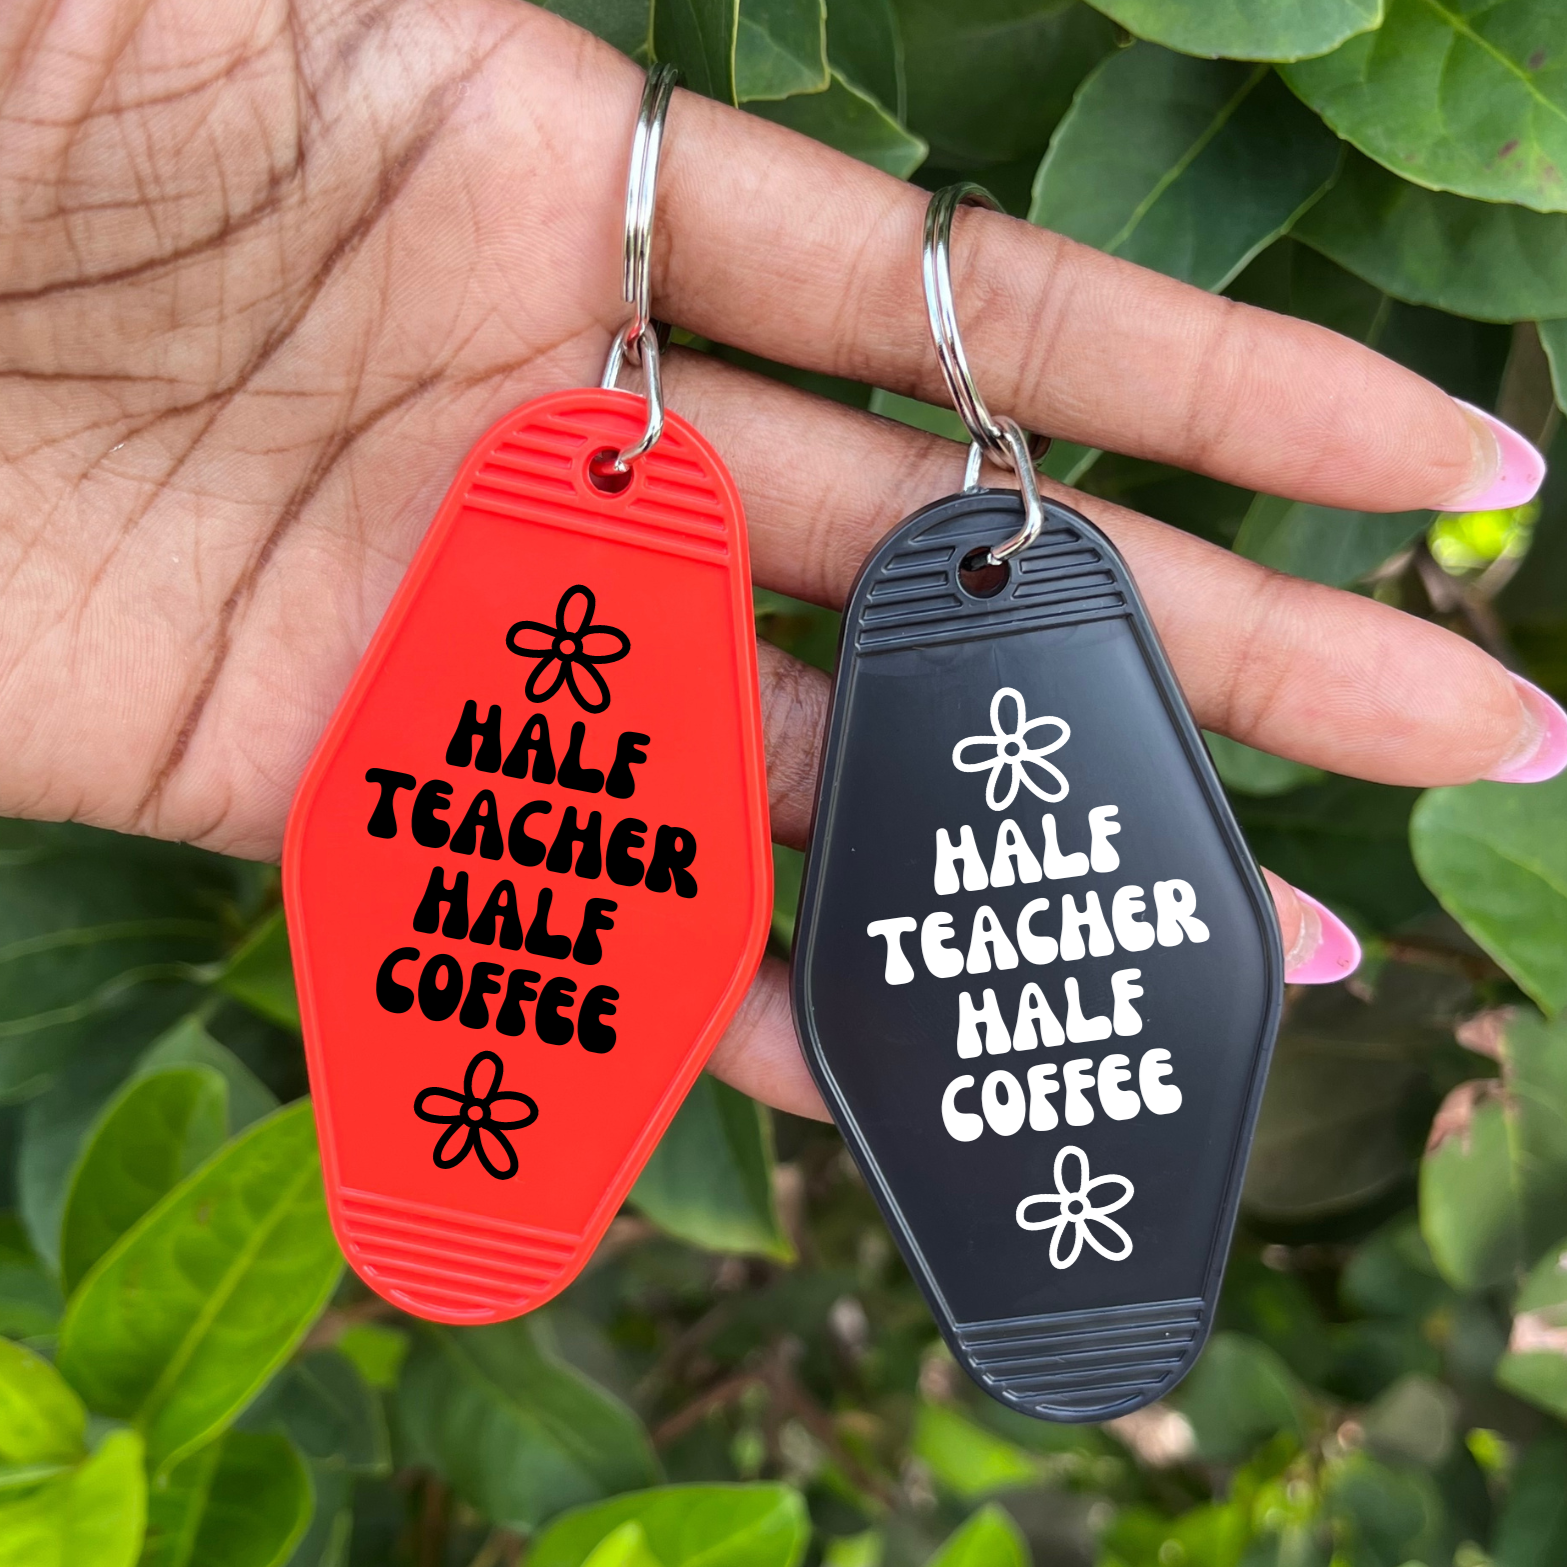 Half Teacher Half Coffee Keychain - The Glam Thangz